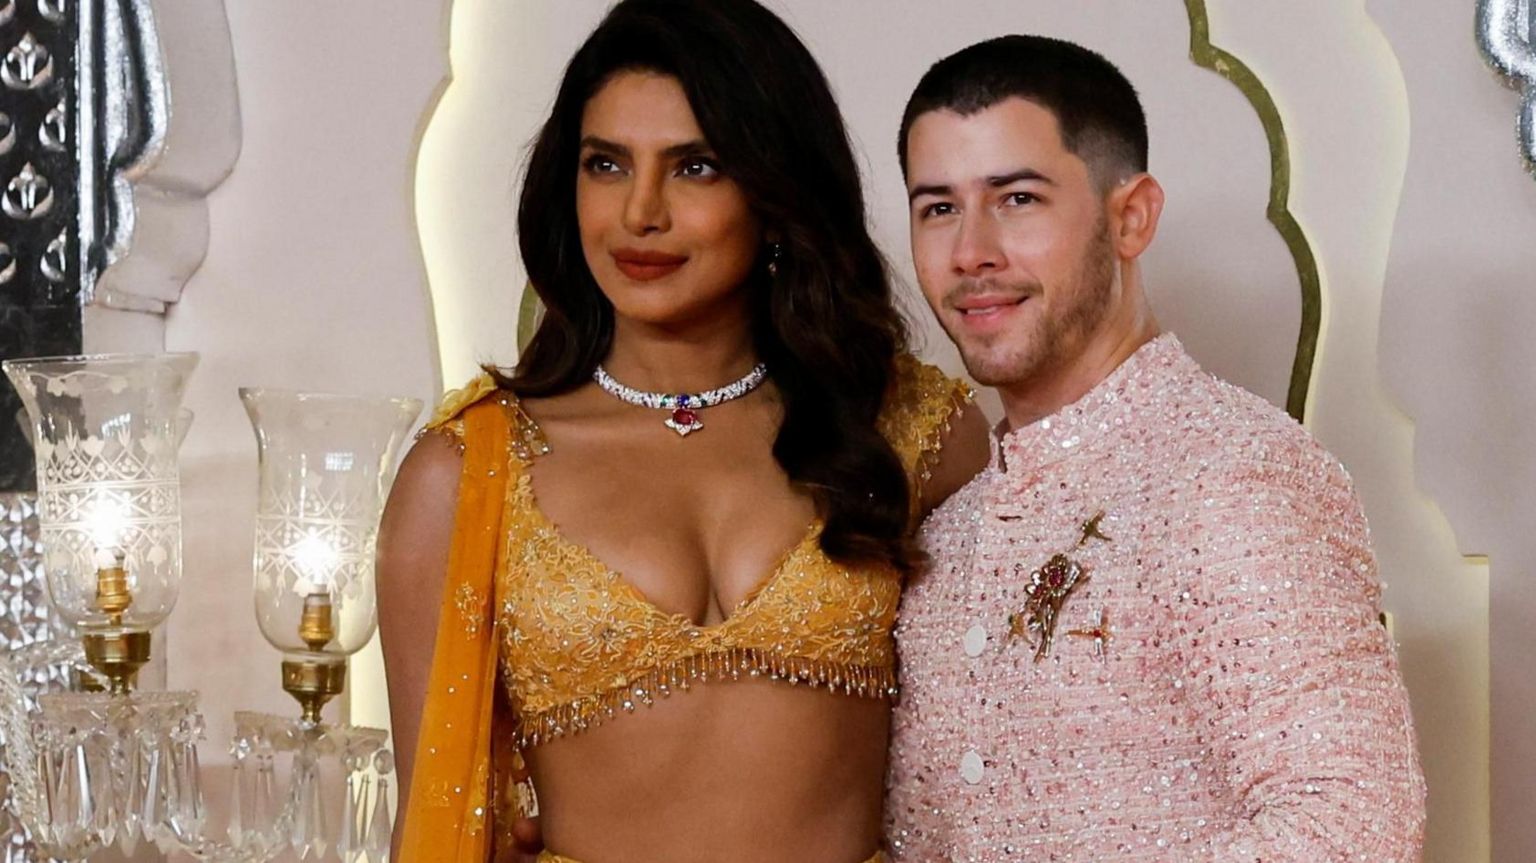 Priyanka Chopra and her husband Nick Jonas are both dressed in lavish wedding outfits, smiling at the cameras.